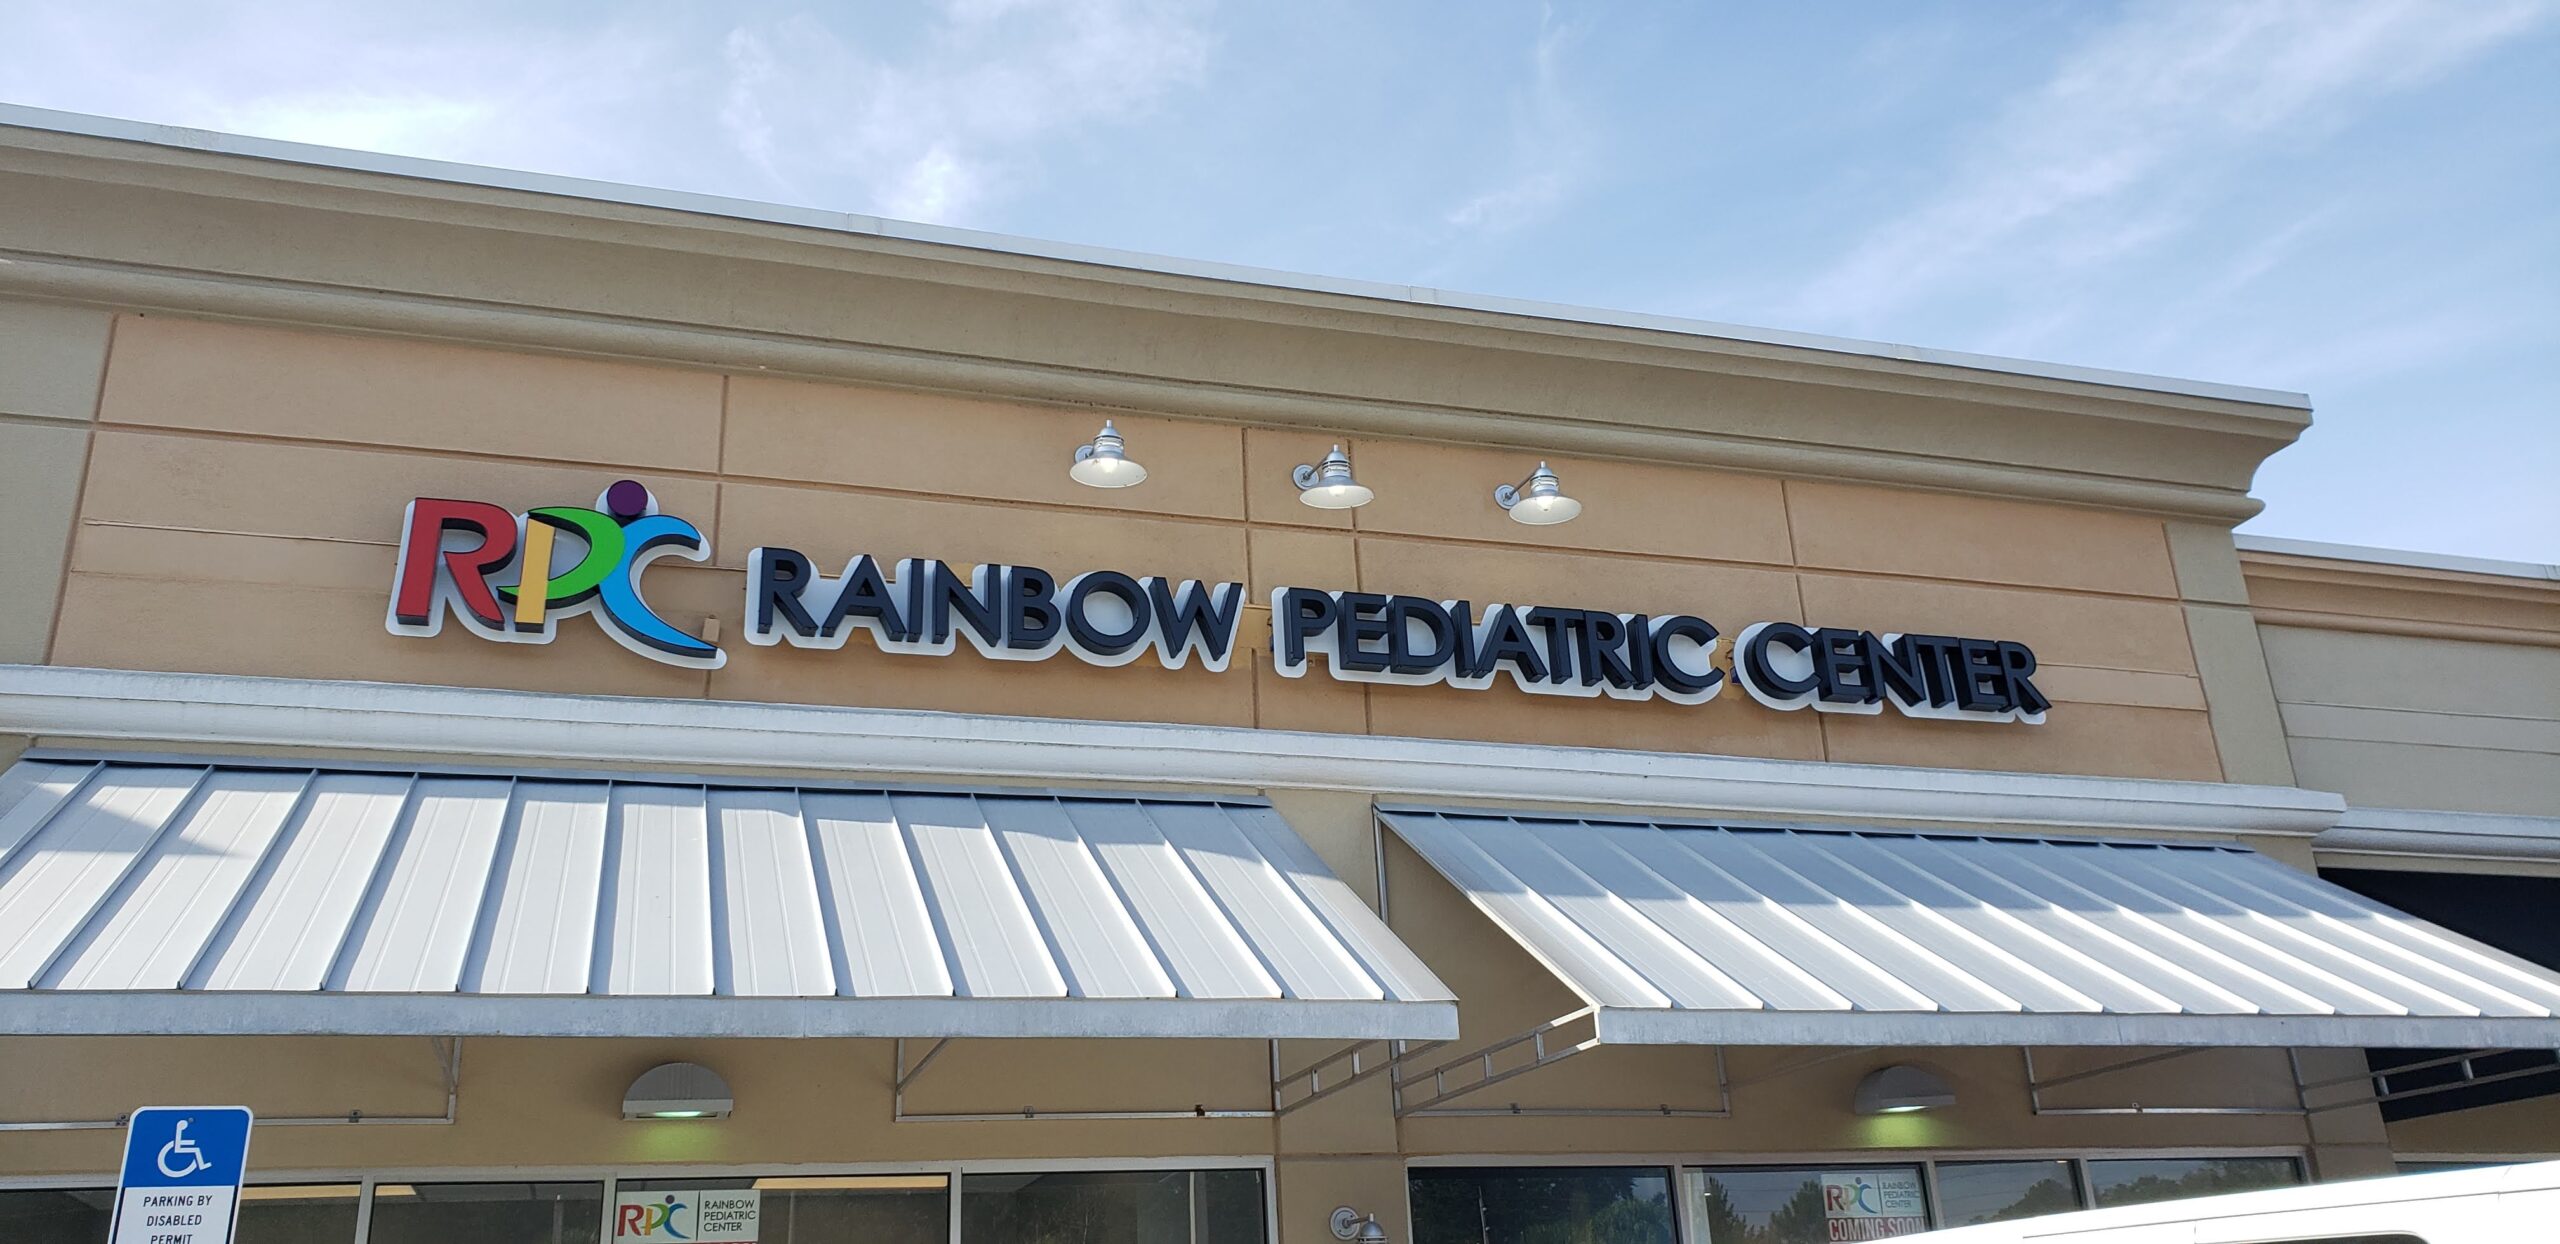 Design-Build Project “Rainbow Pediatric Center, St. Johns”